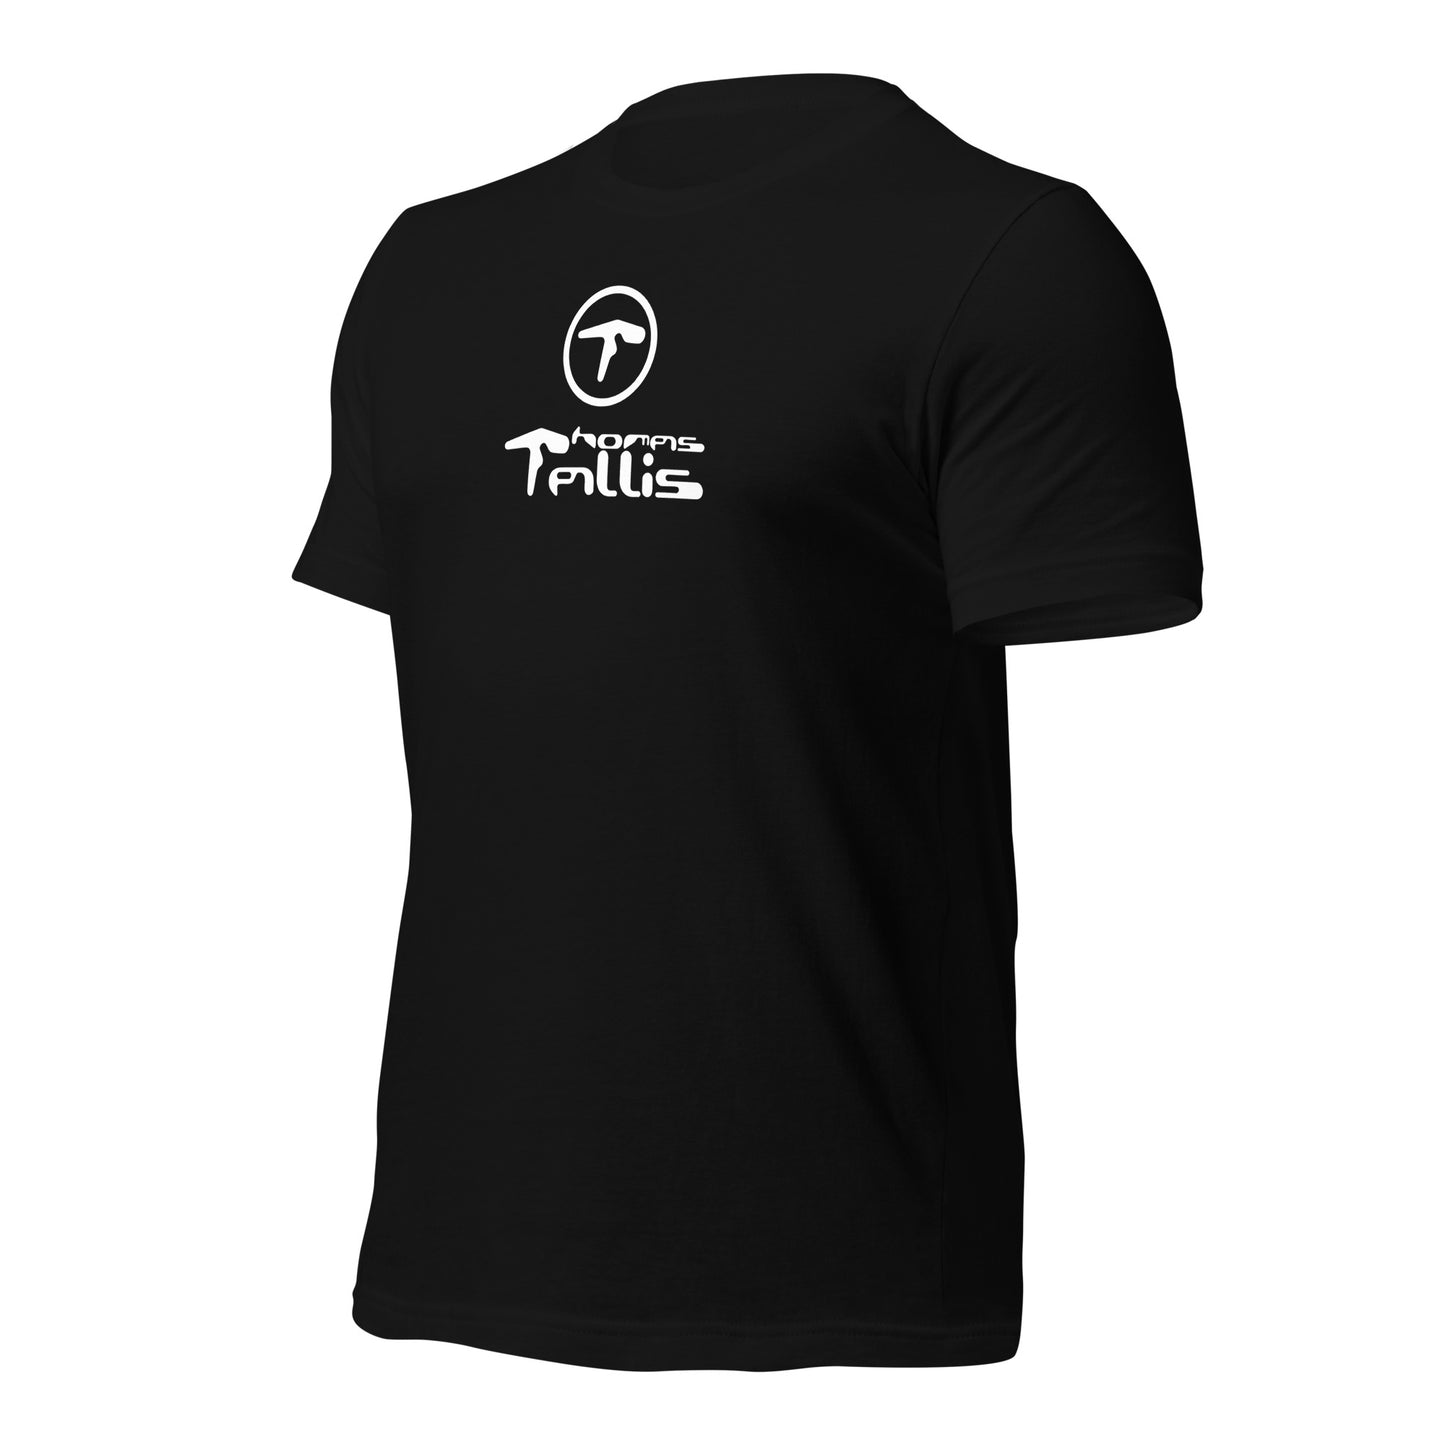 Thomas Tallis - Band Tees Unisex t-shirt